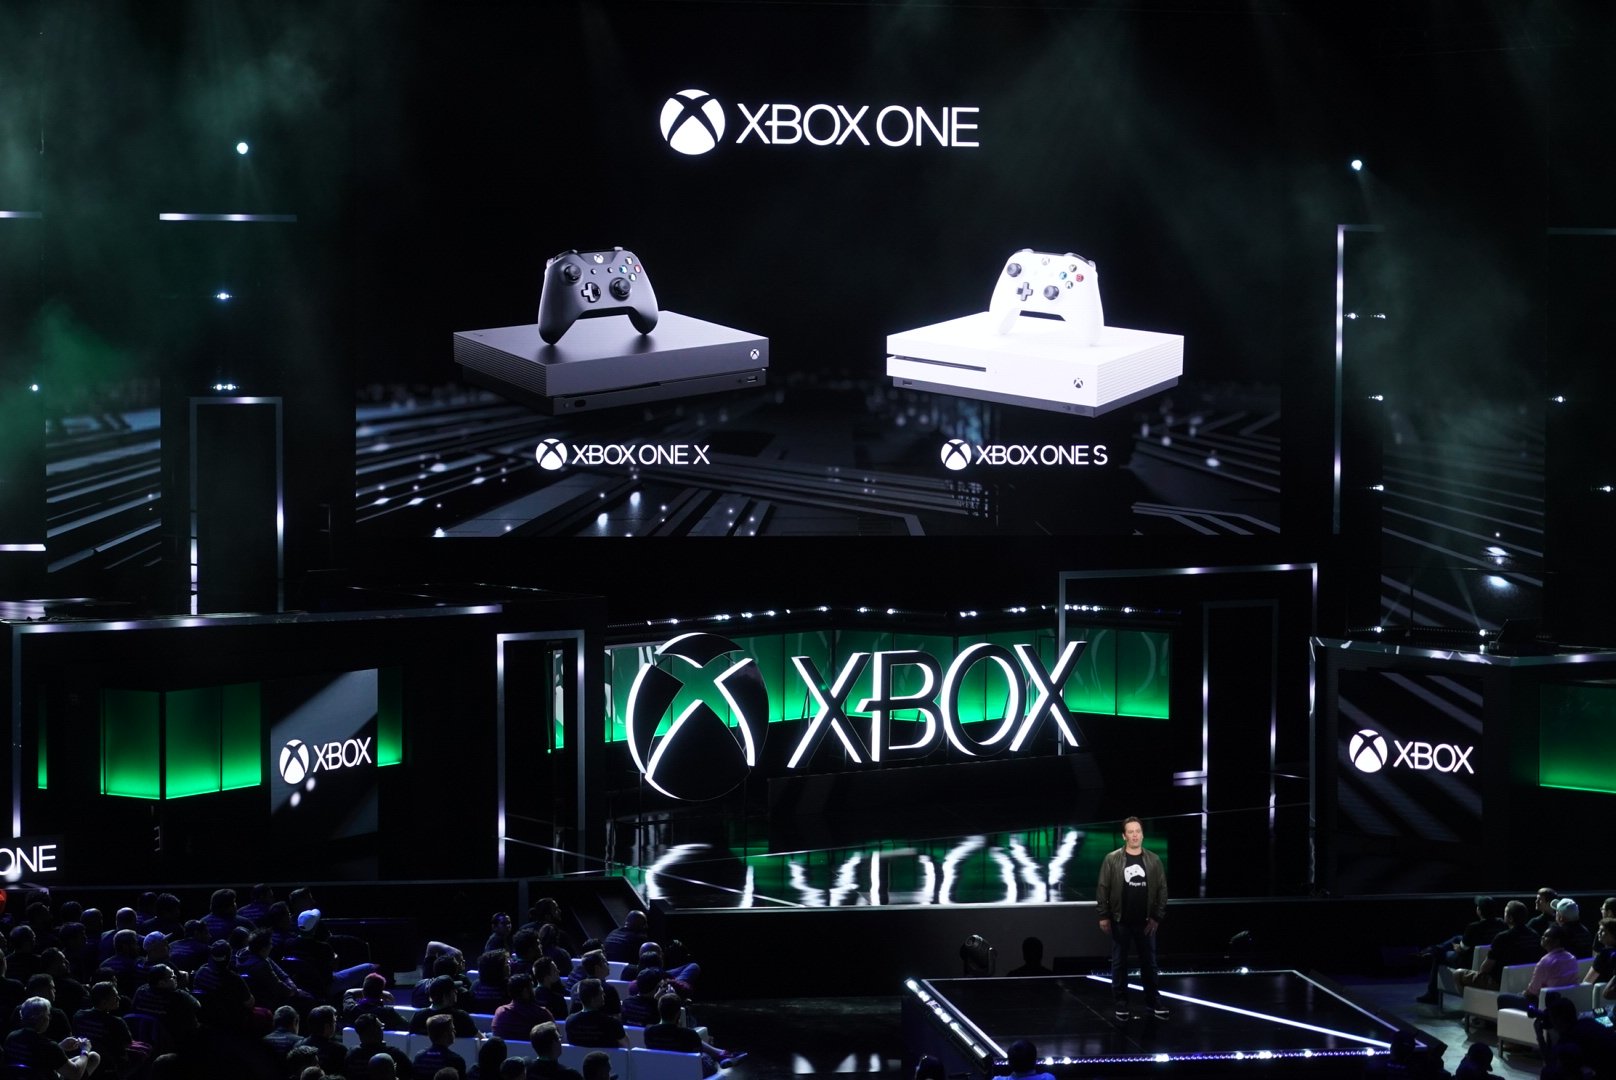 Microsoft Xbox One X Gaming Console CYV-00001 B&H Photo Video